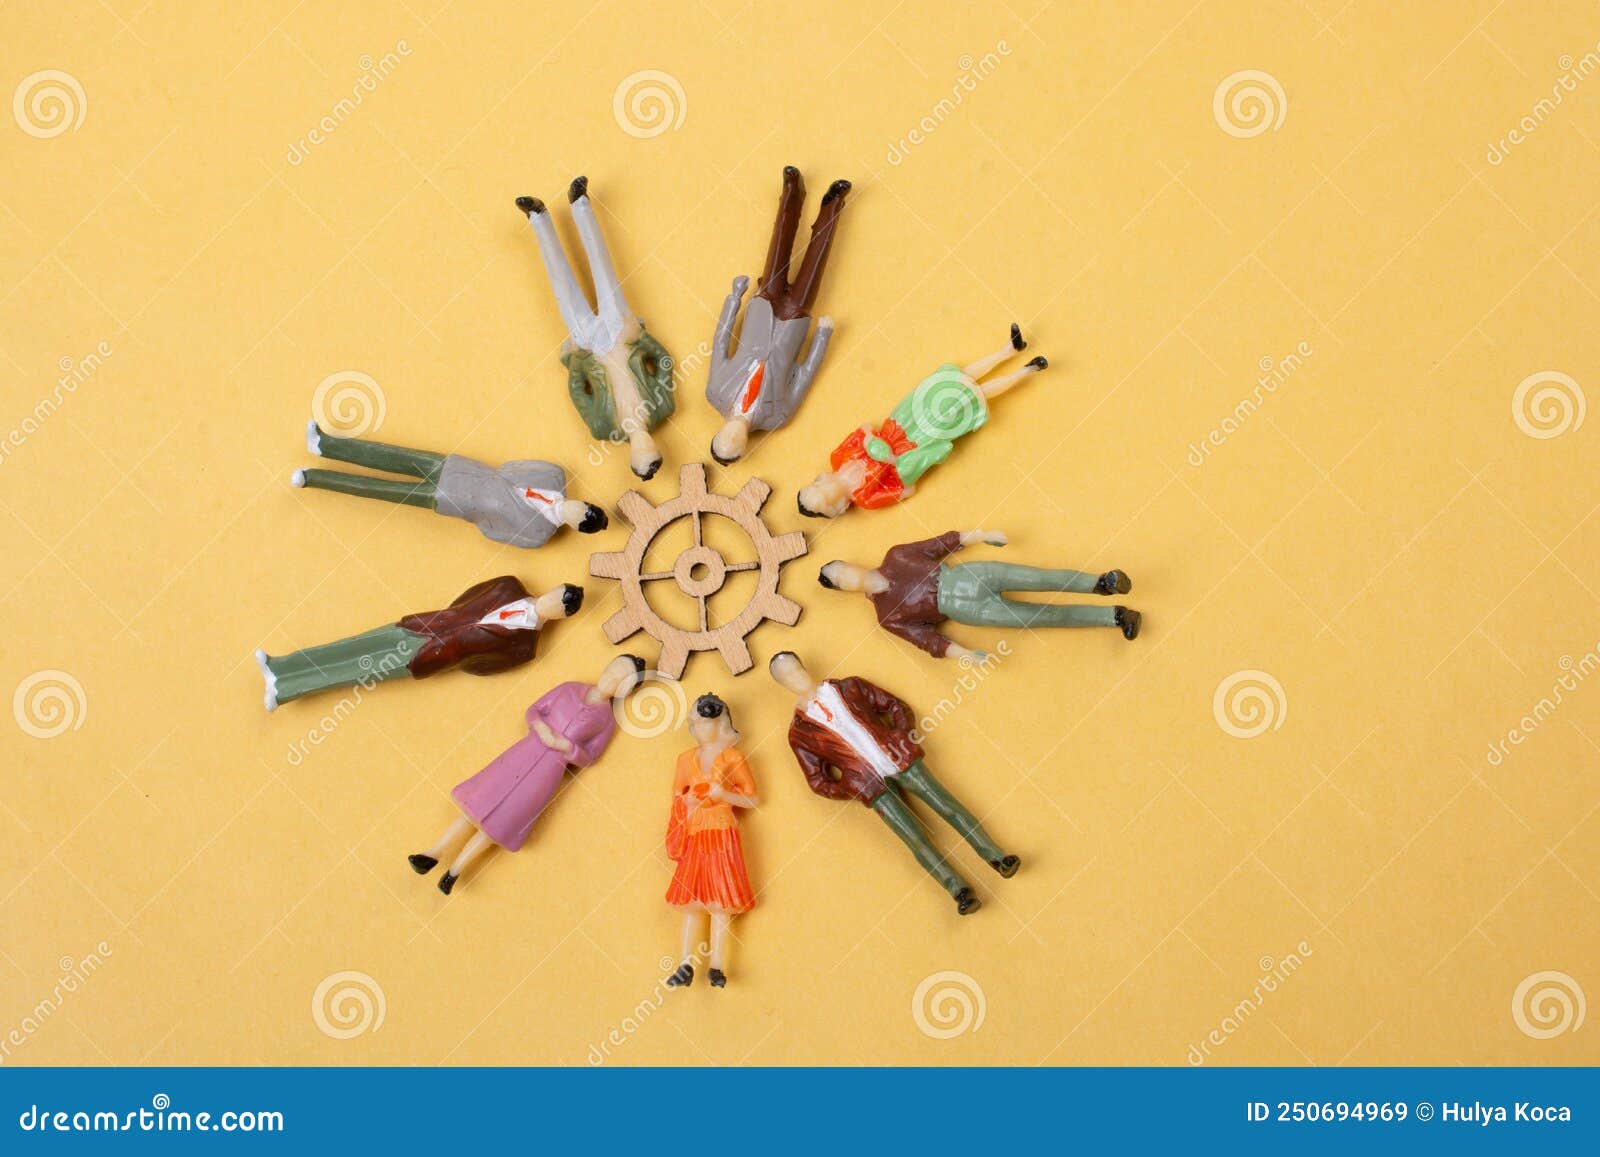 Crowd of Miniature People Figurine Around a Gearwheel Stock Image ...